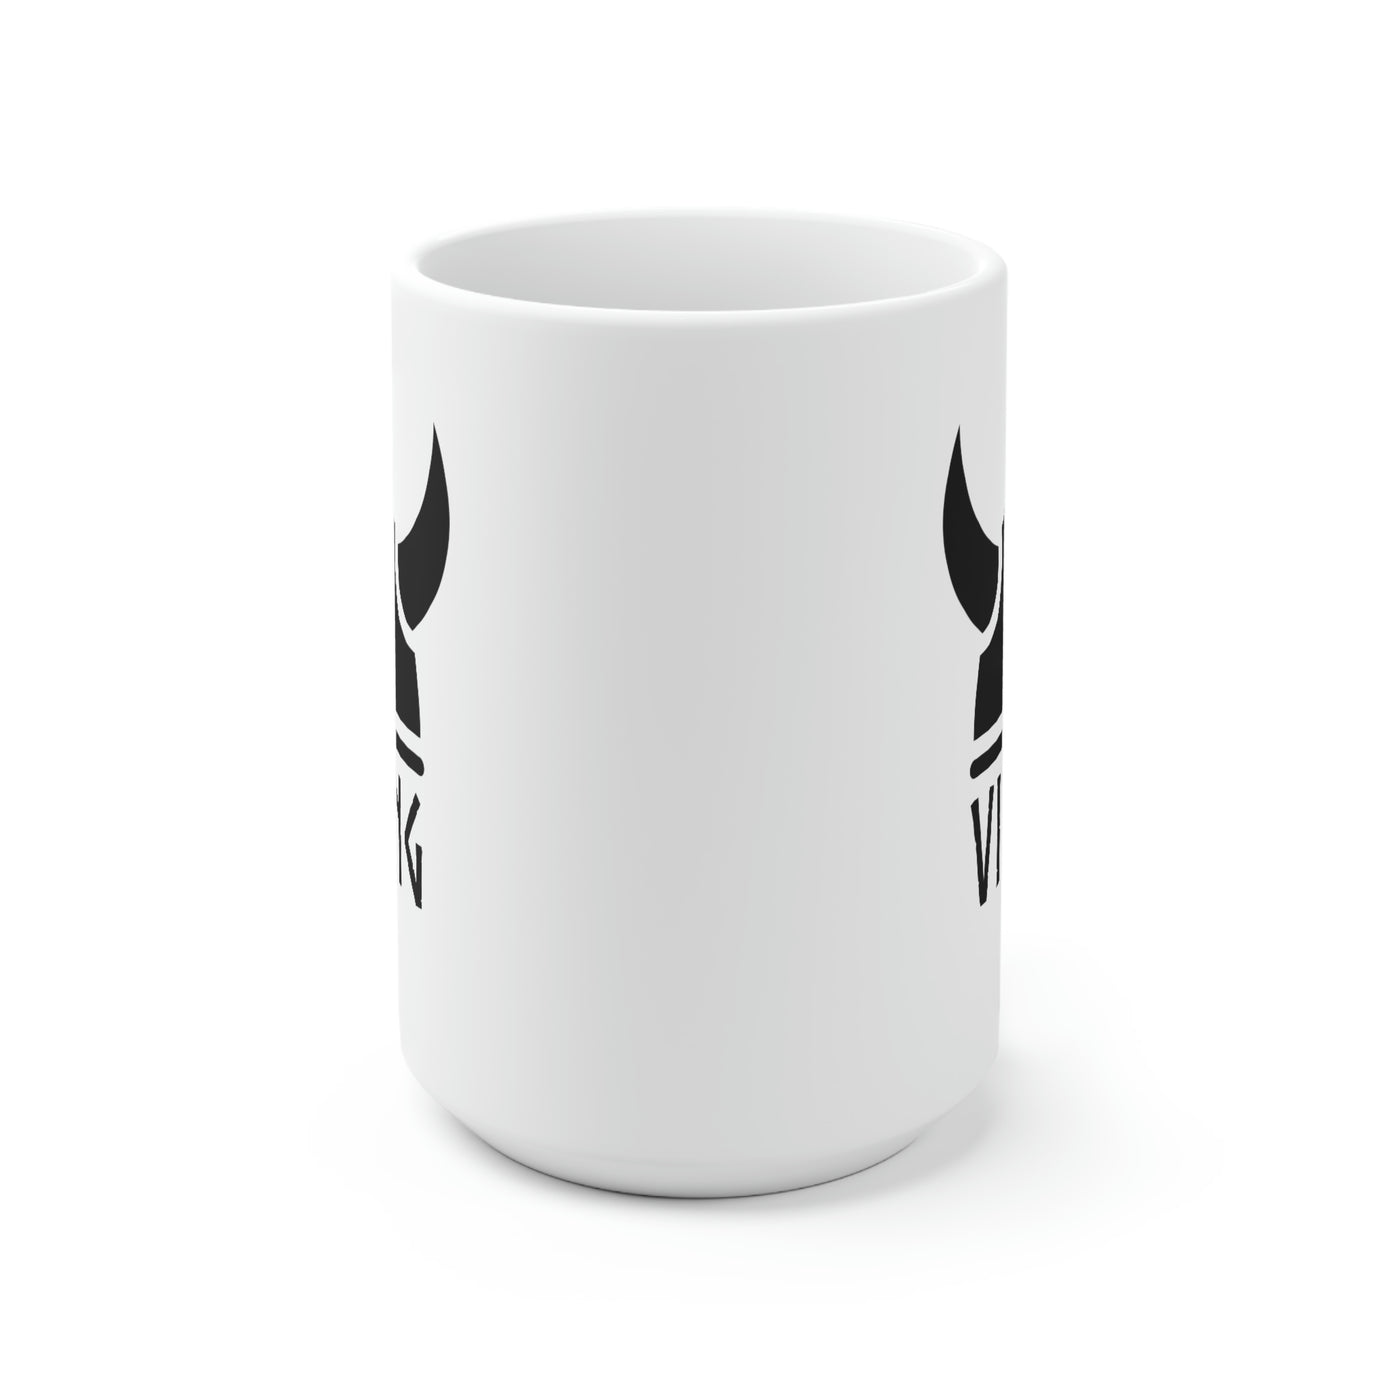 Big Viking Mug Scandinavian Design Studio